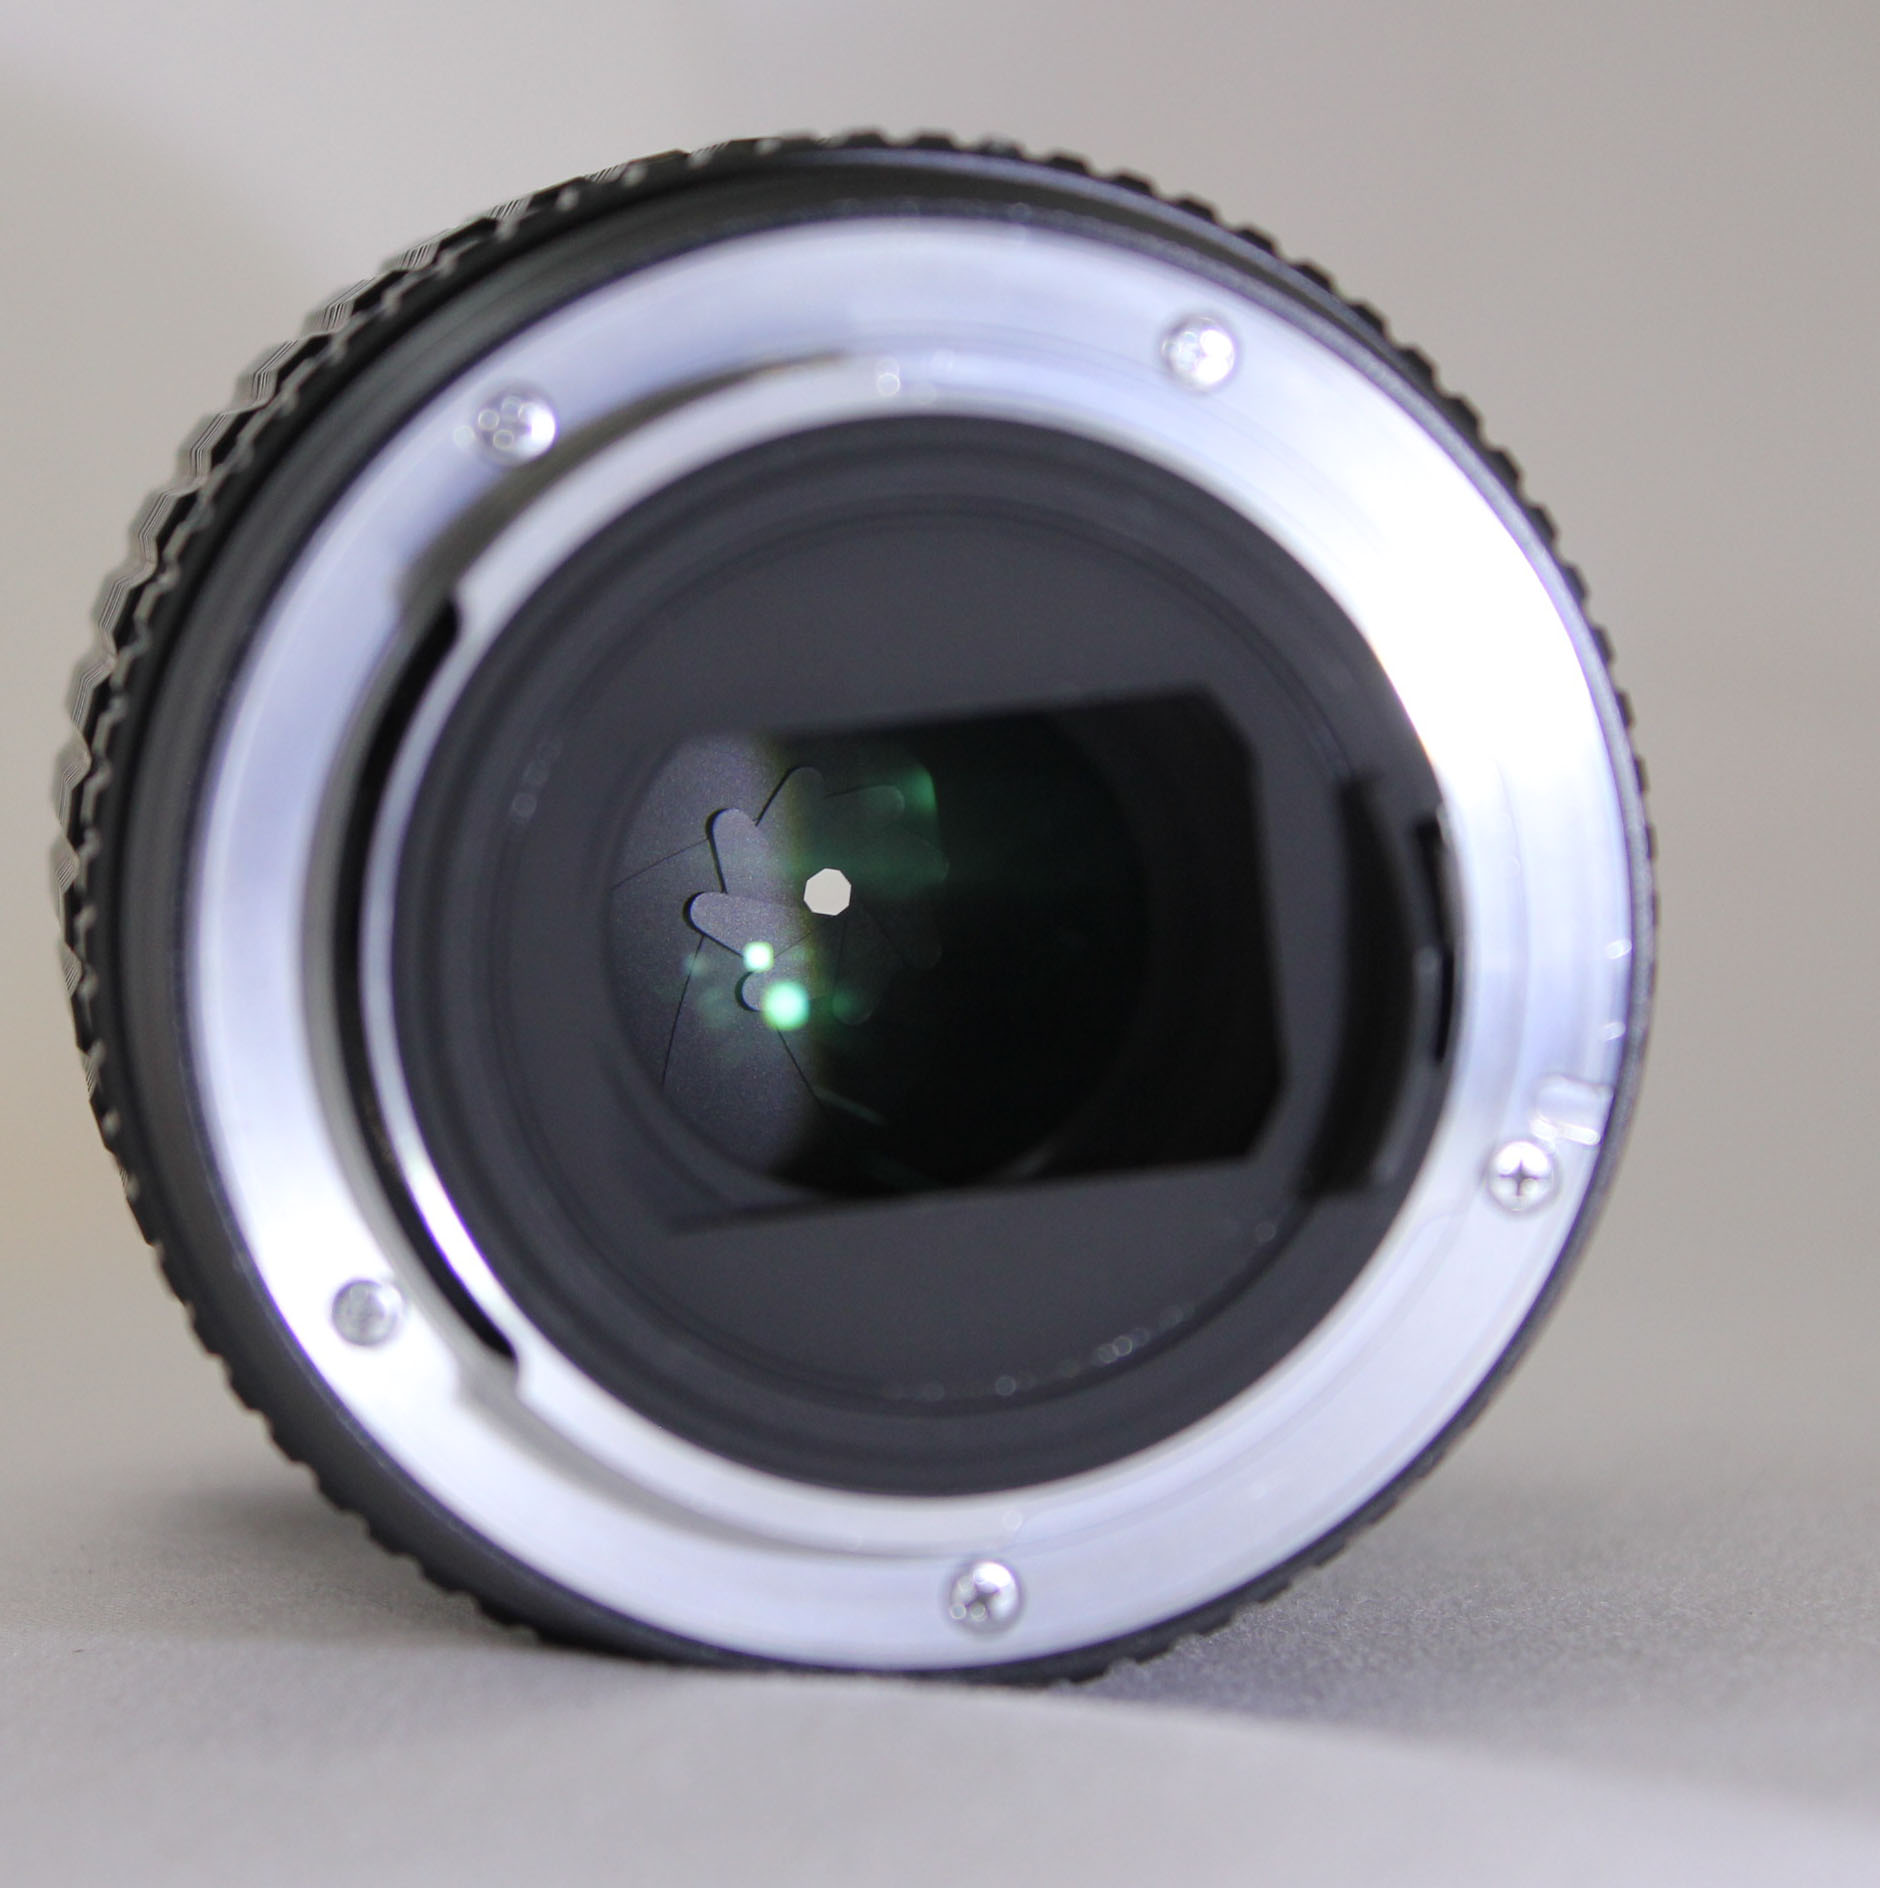  Pentax SMC PENTAX 135mm F/2.5 MF K Mount Lens with Hood from Japan  Photo 8